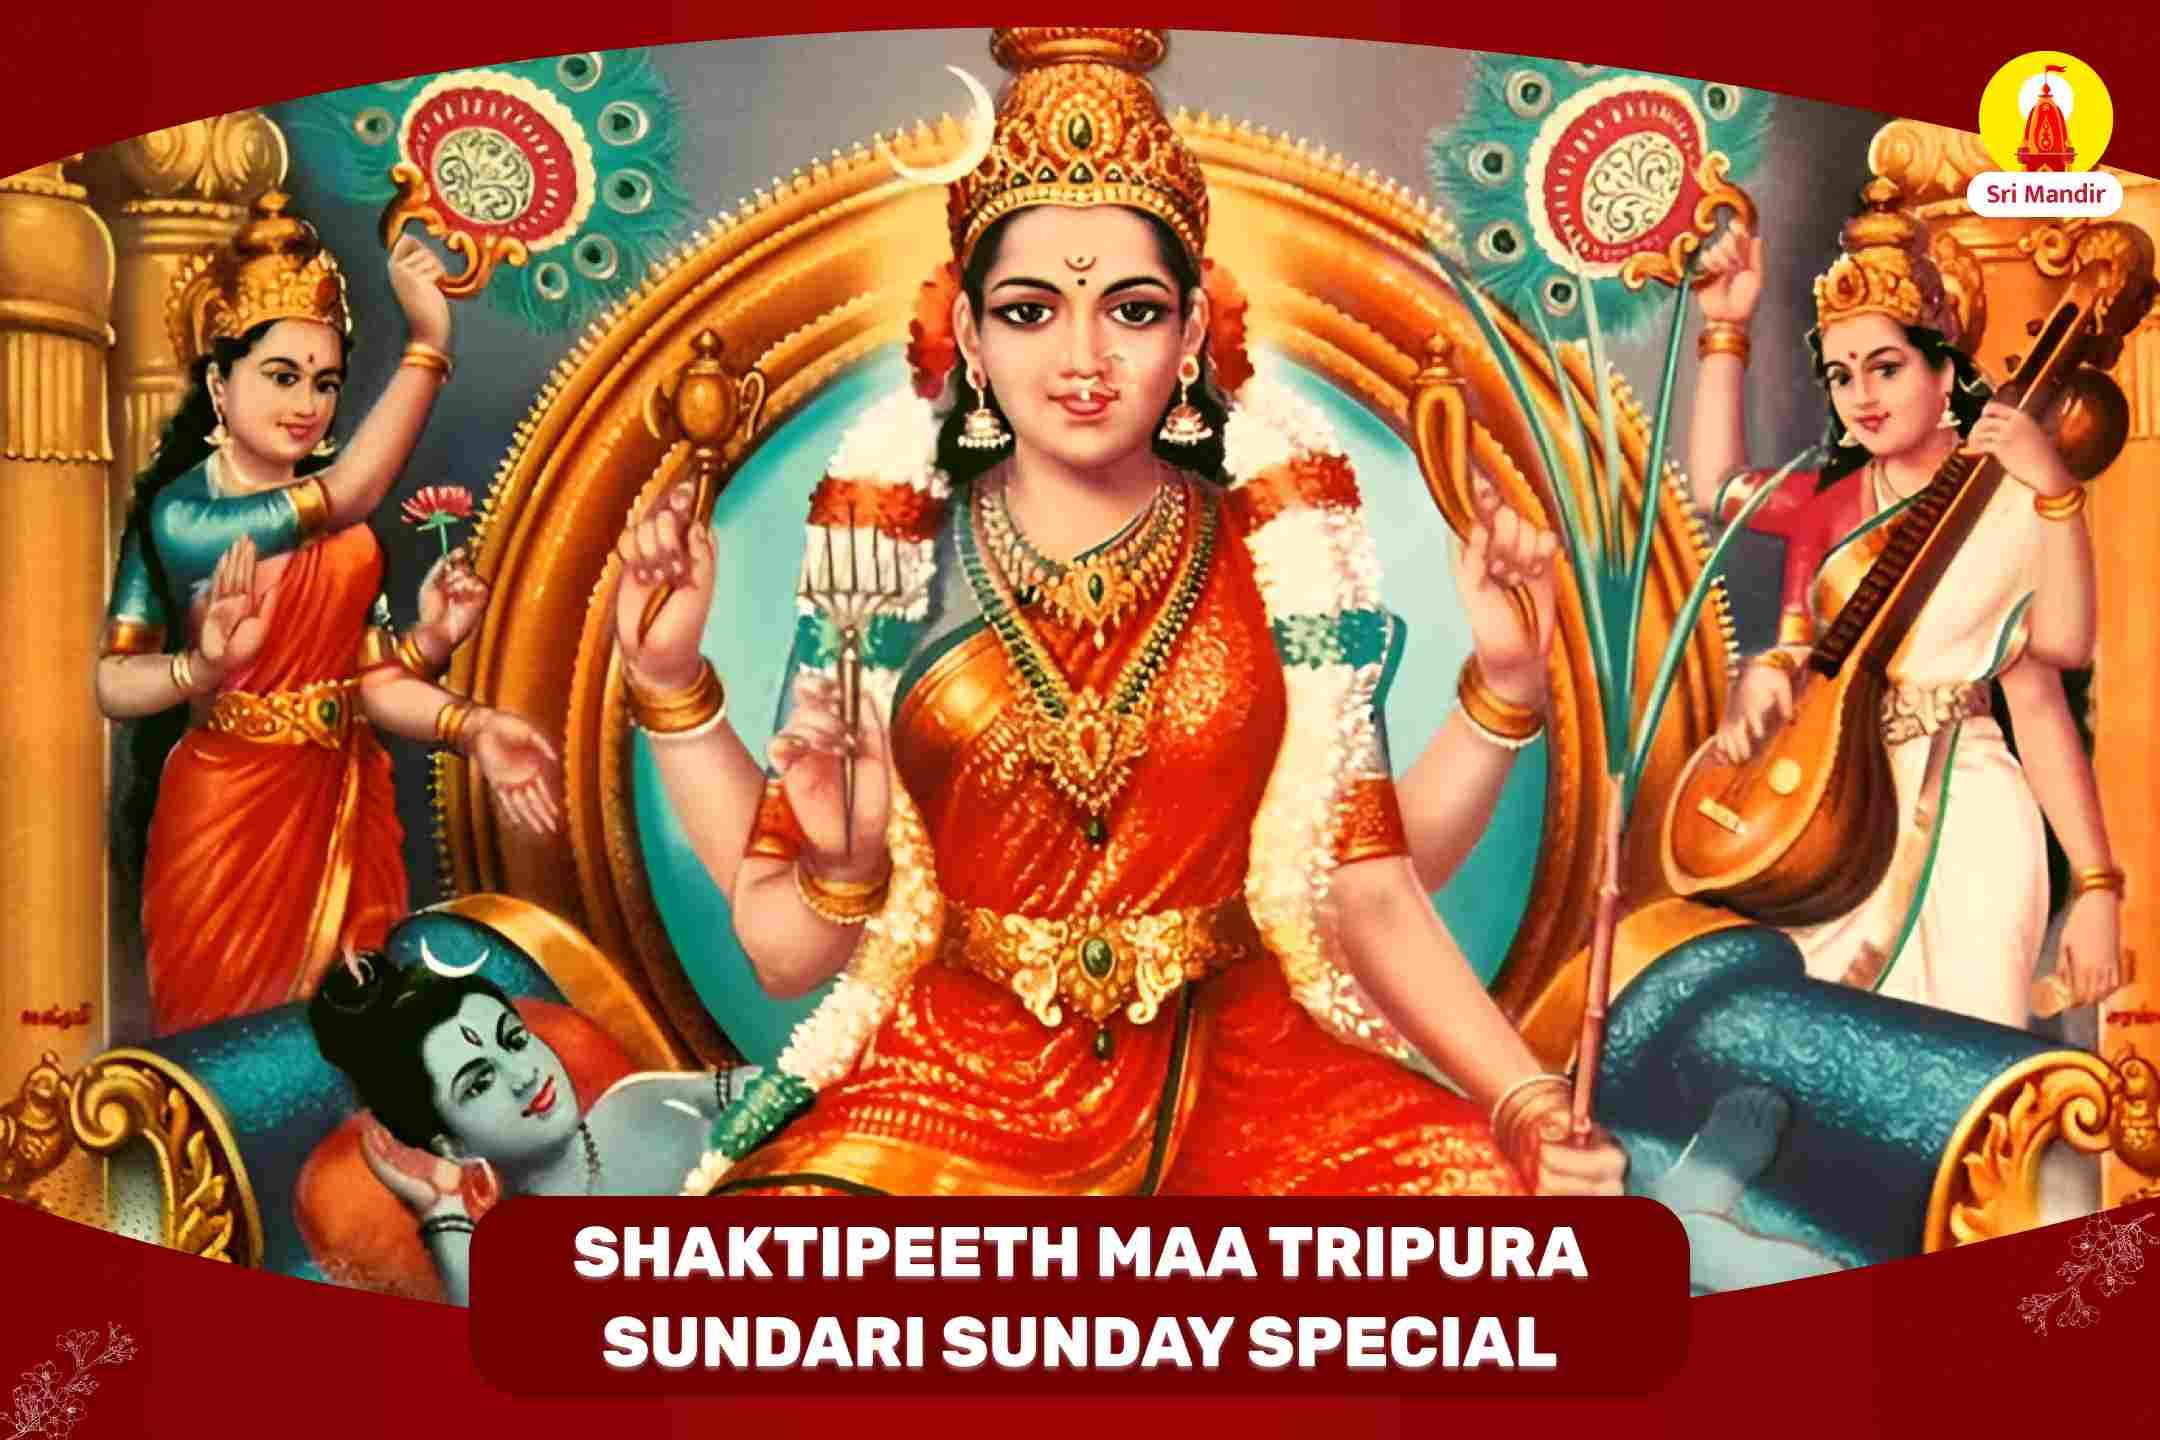 Shaktipeeth Sunday Special Lalita Sahastranama Tripura Sundari Yagya for Fulfilment of All Wishes